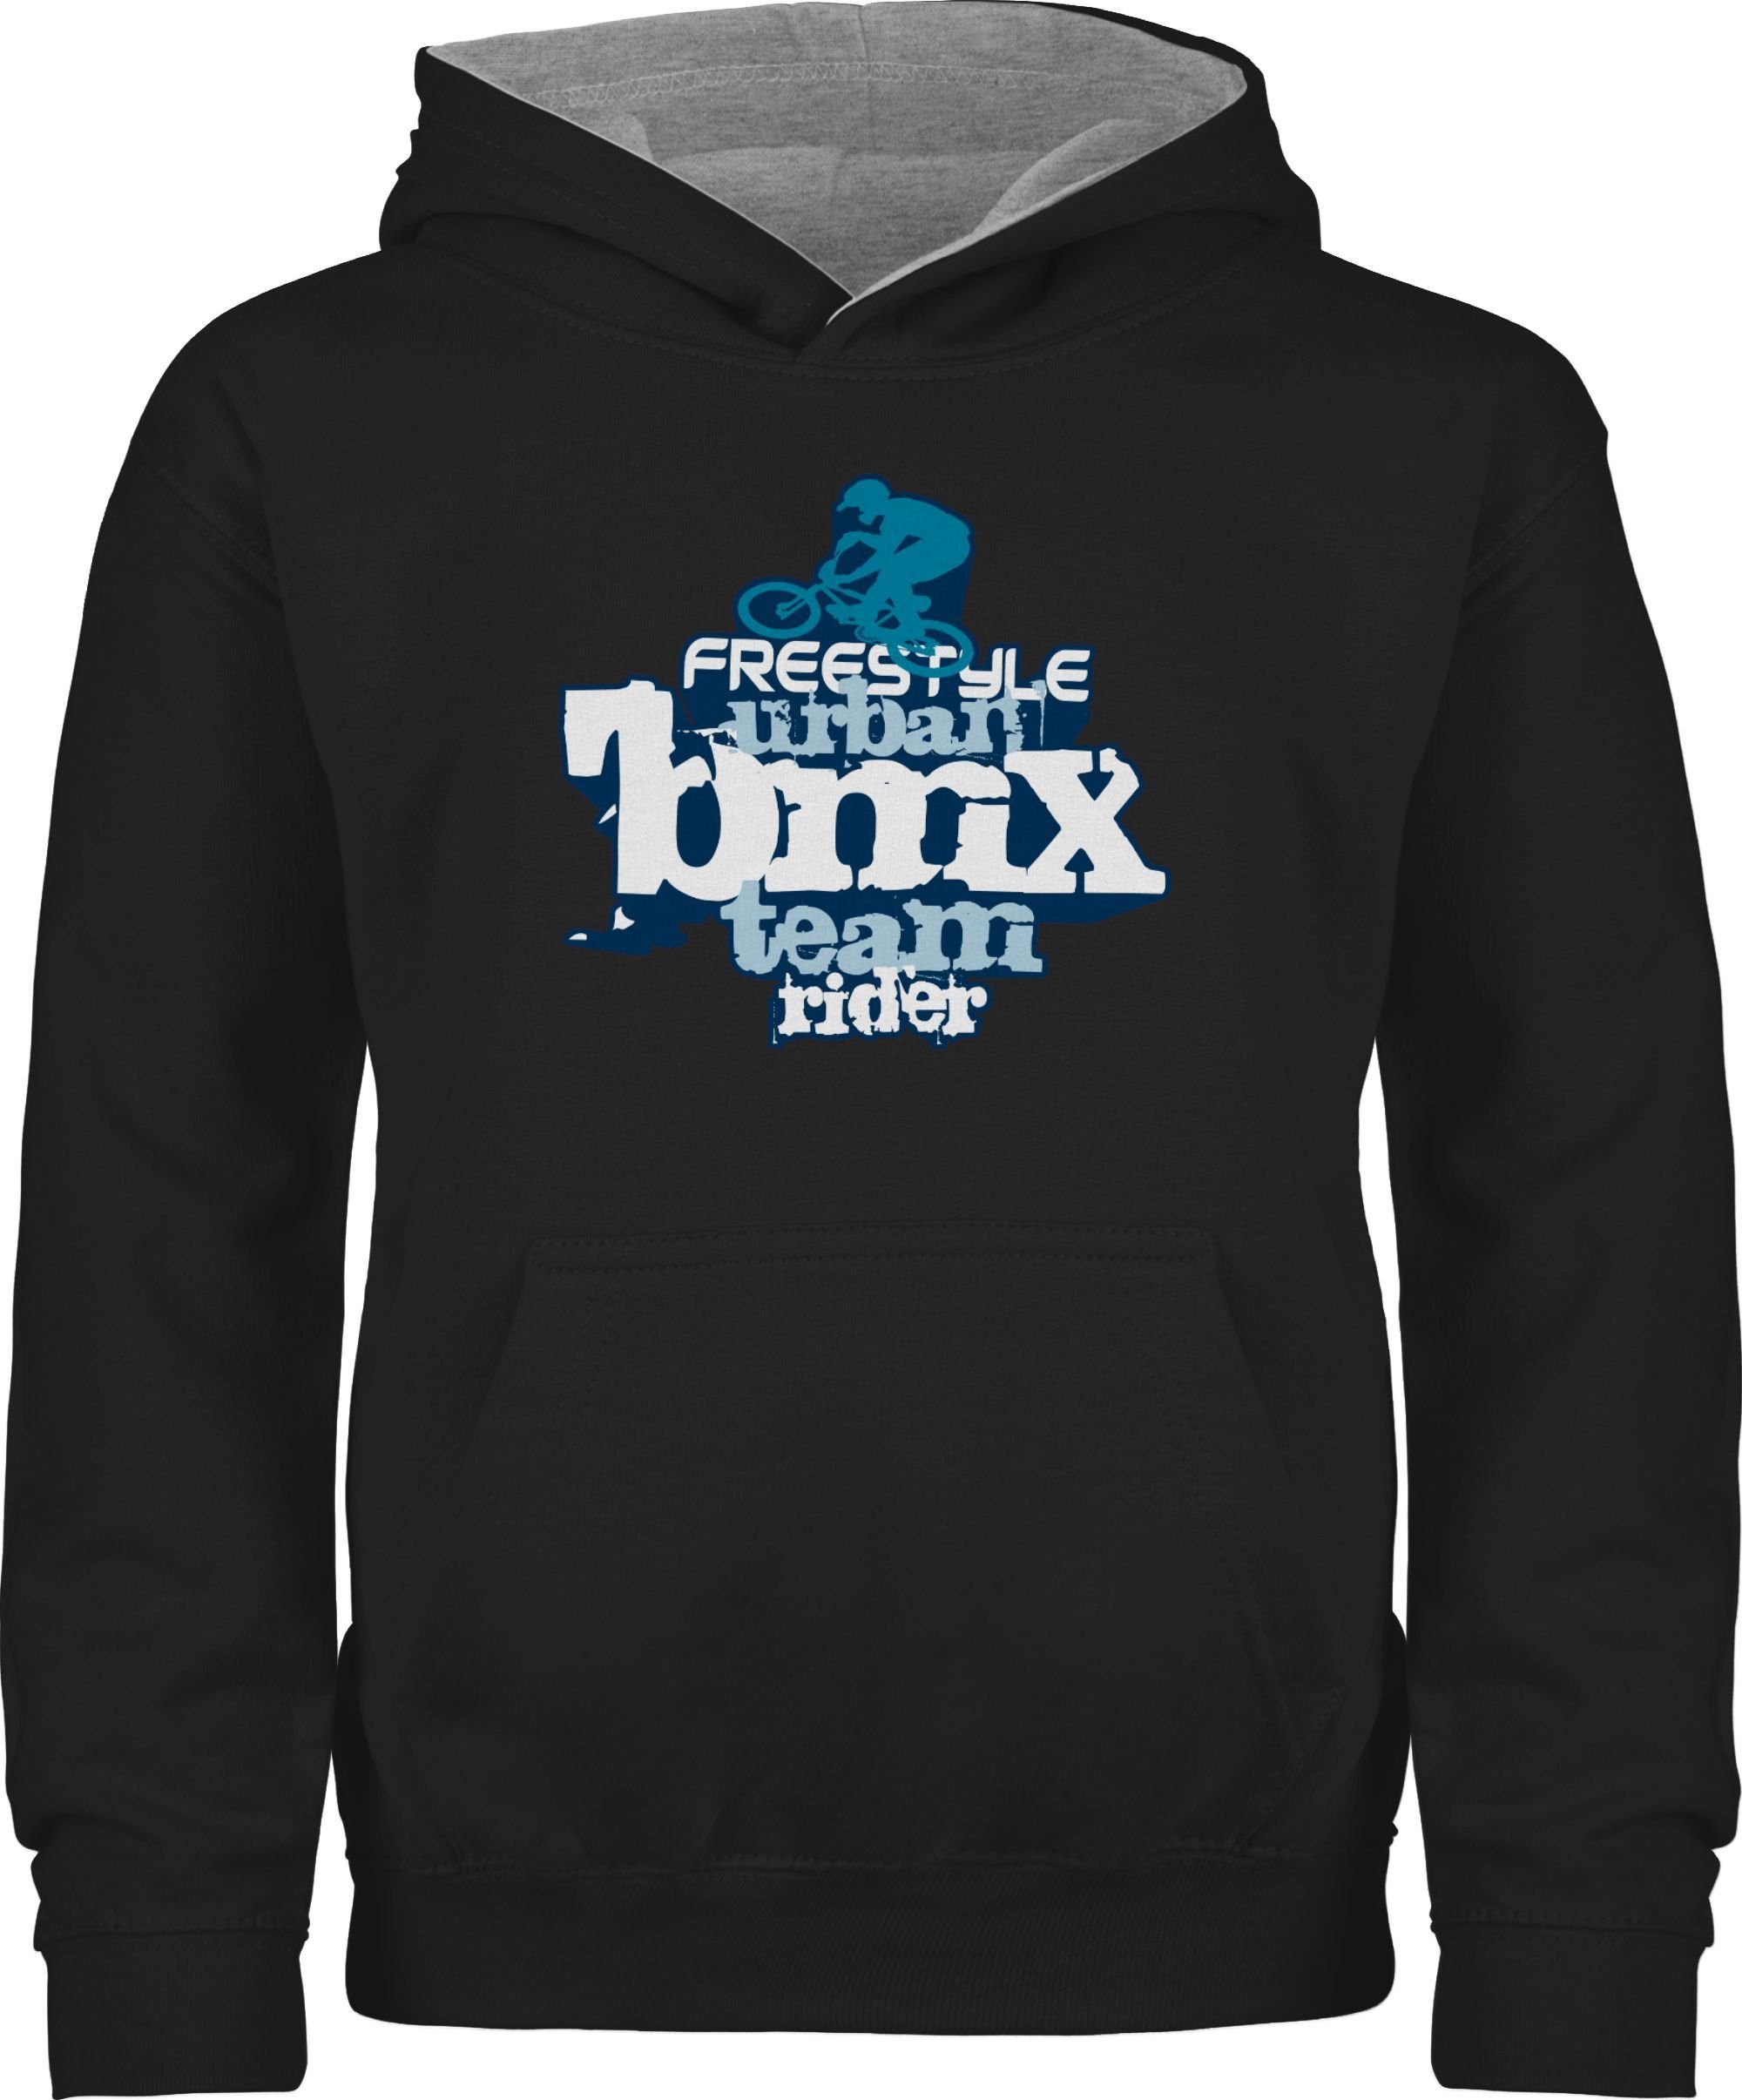 Shirtracer Hoodie BMX Kinder Sport Kleidung 2 Schwarz/Grau meliert